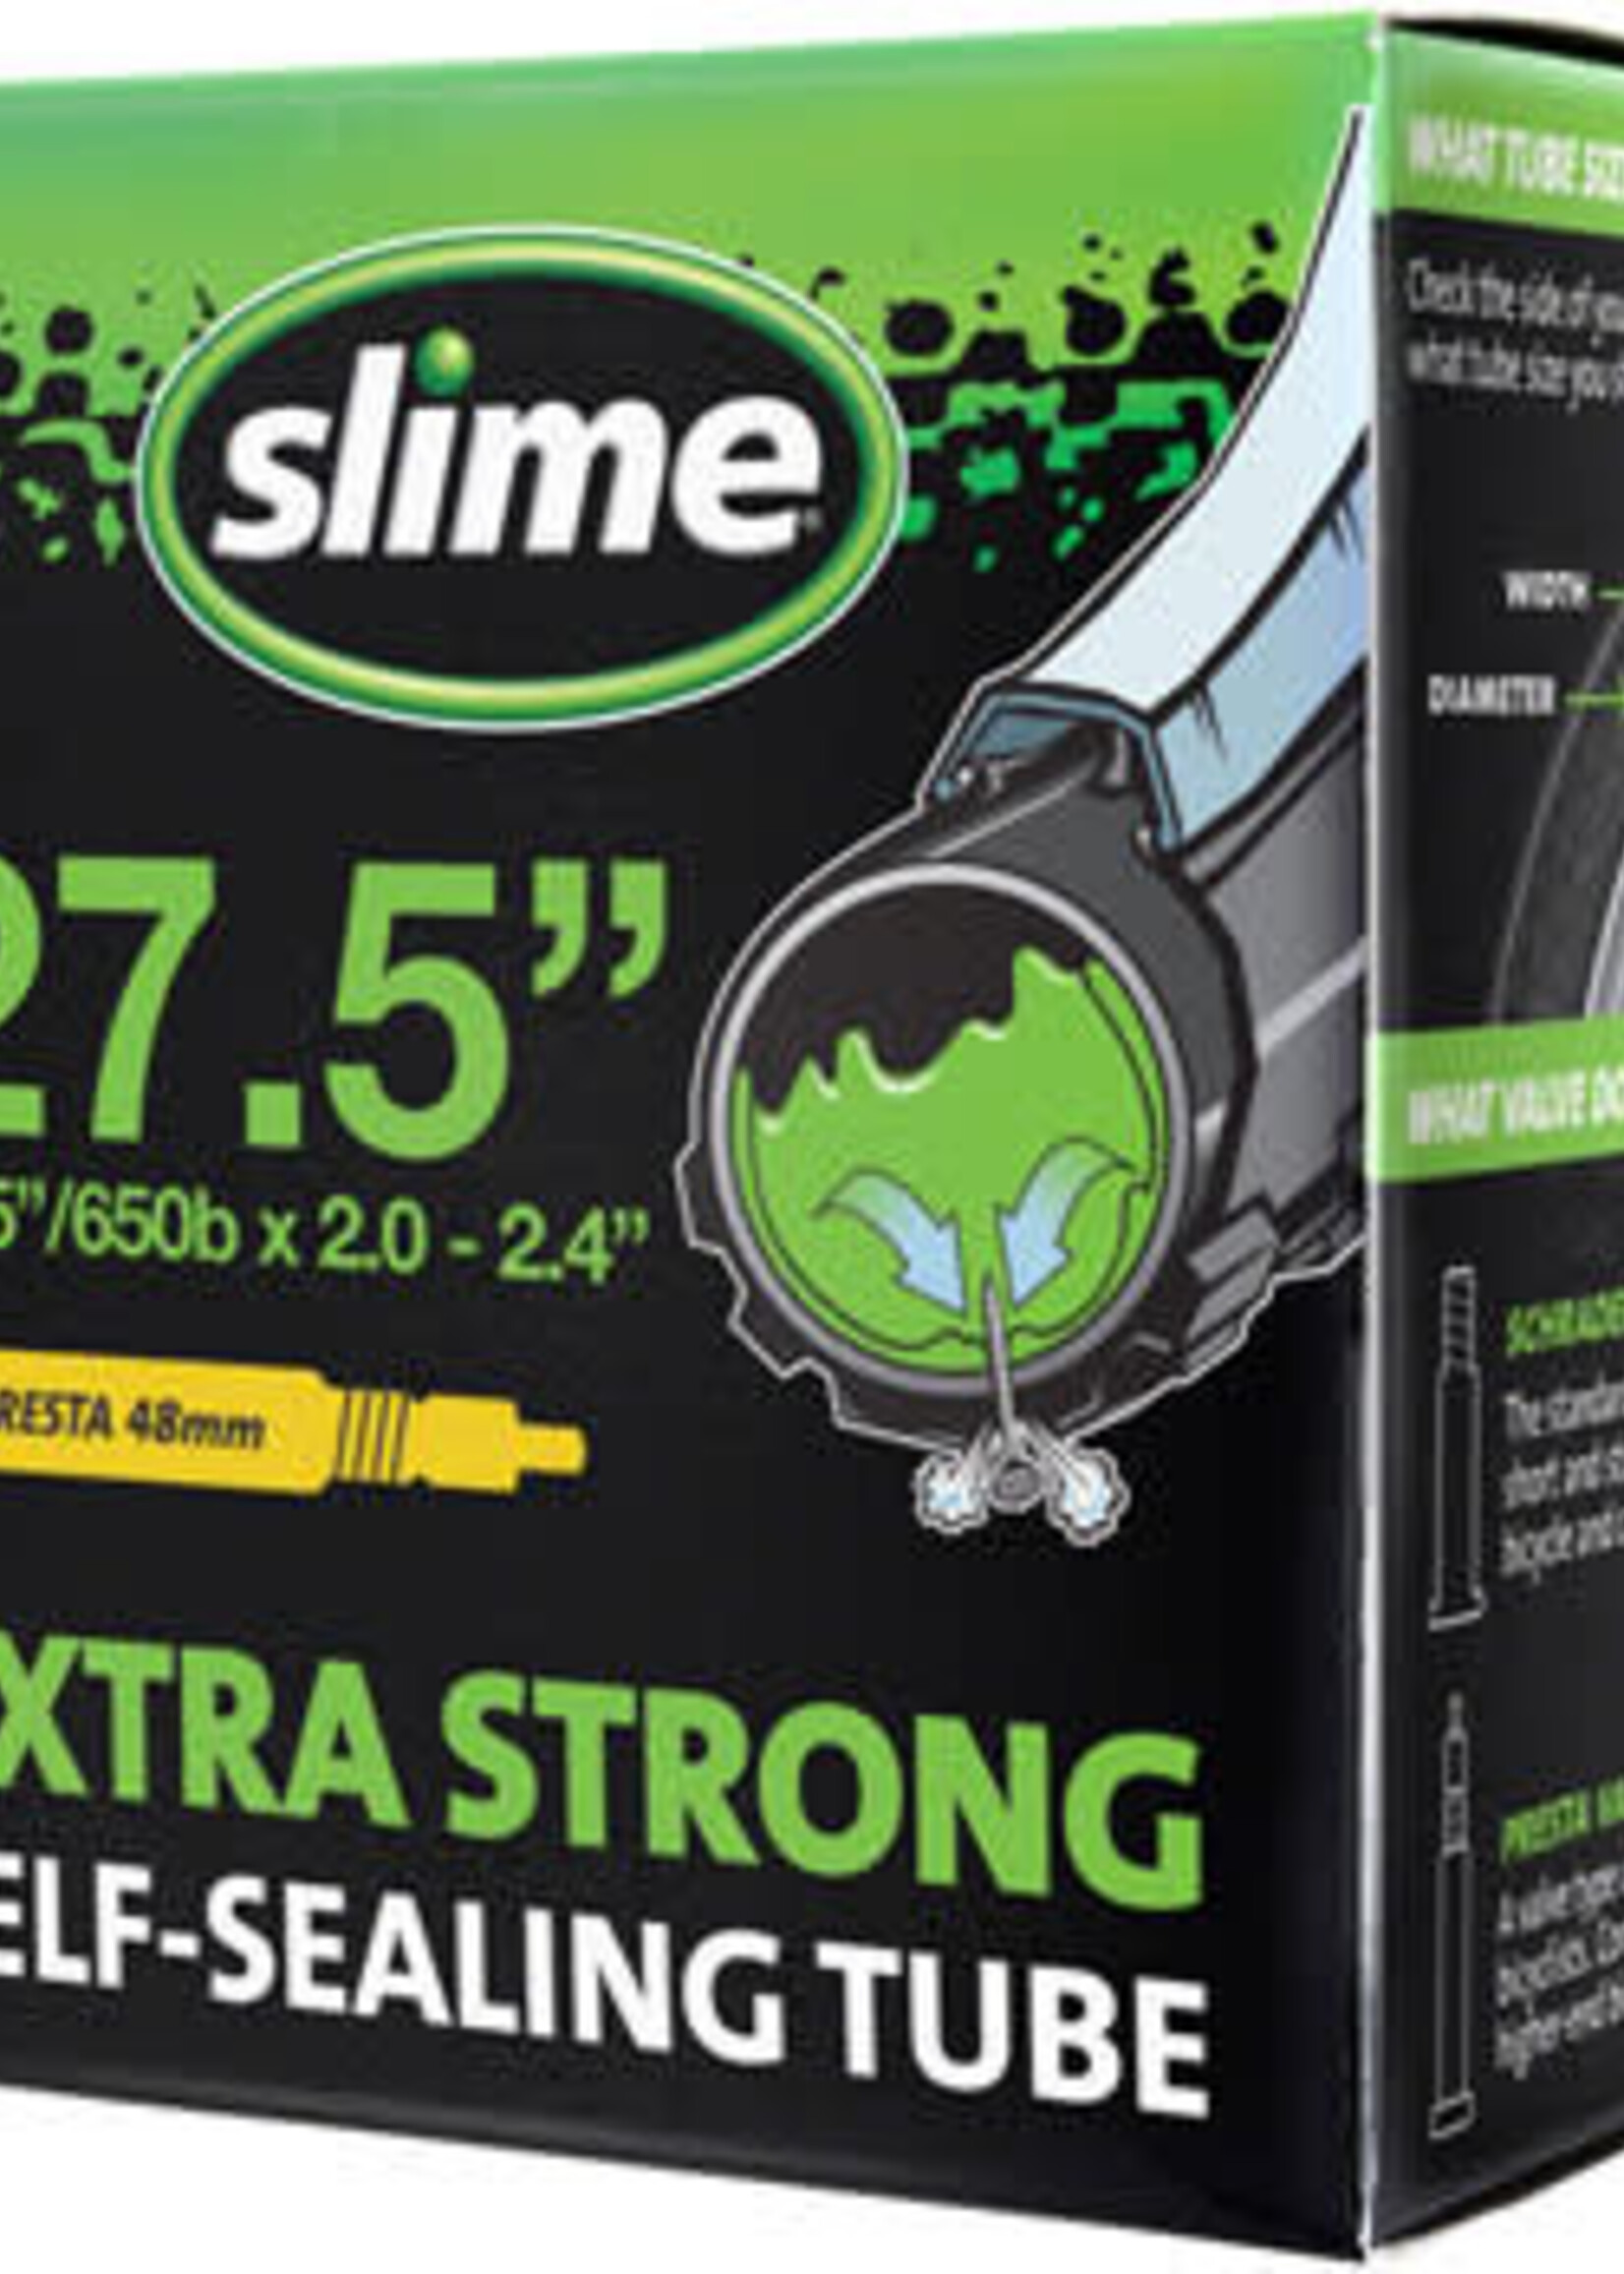 SLIME Slime Self-Sealing Tube 27.5" x 2.0-2.4", 32mm Presta Valve